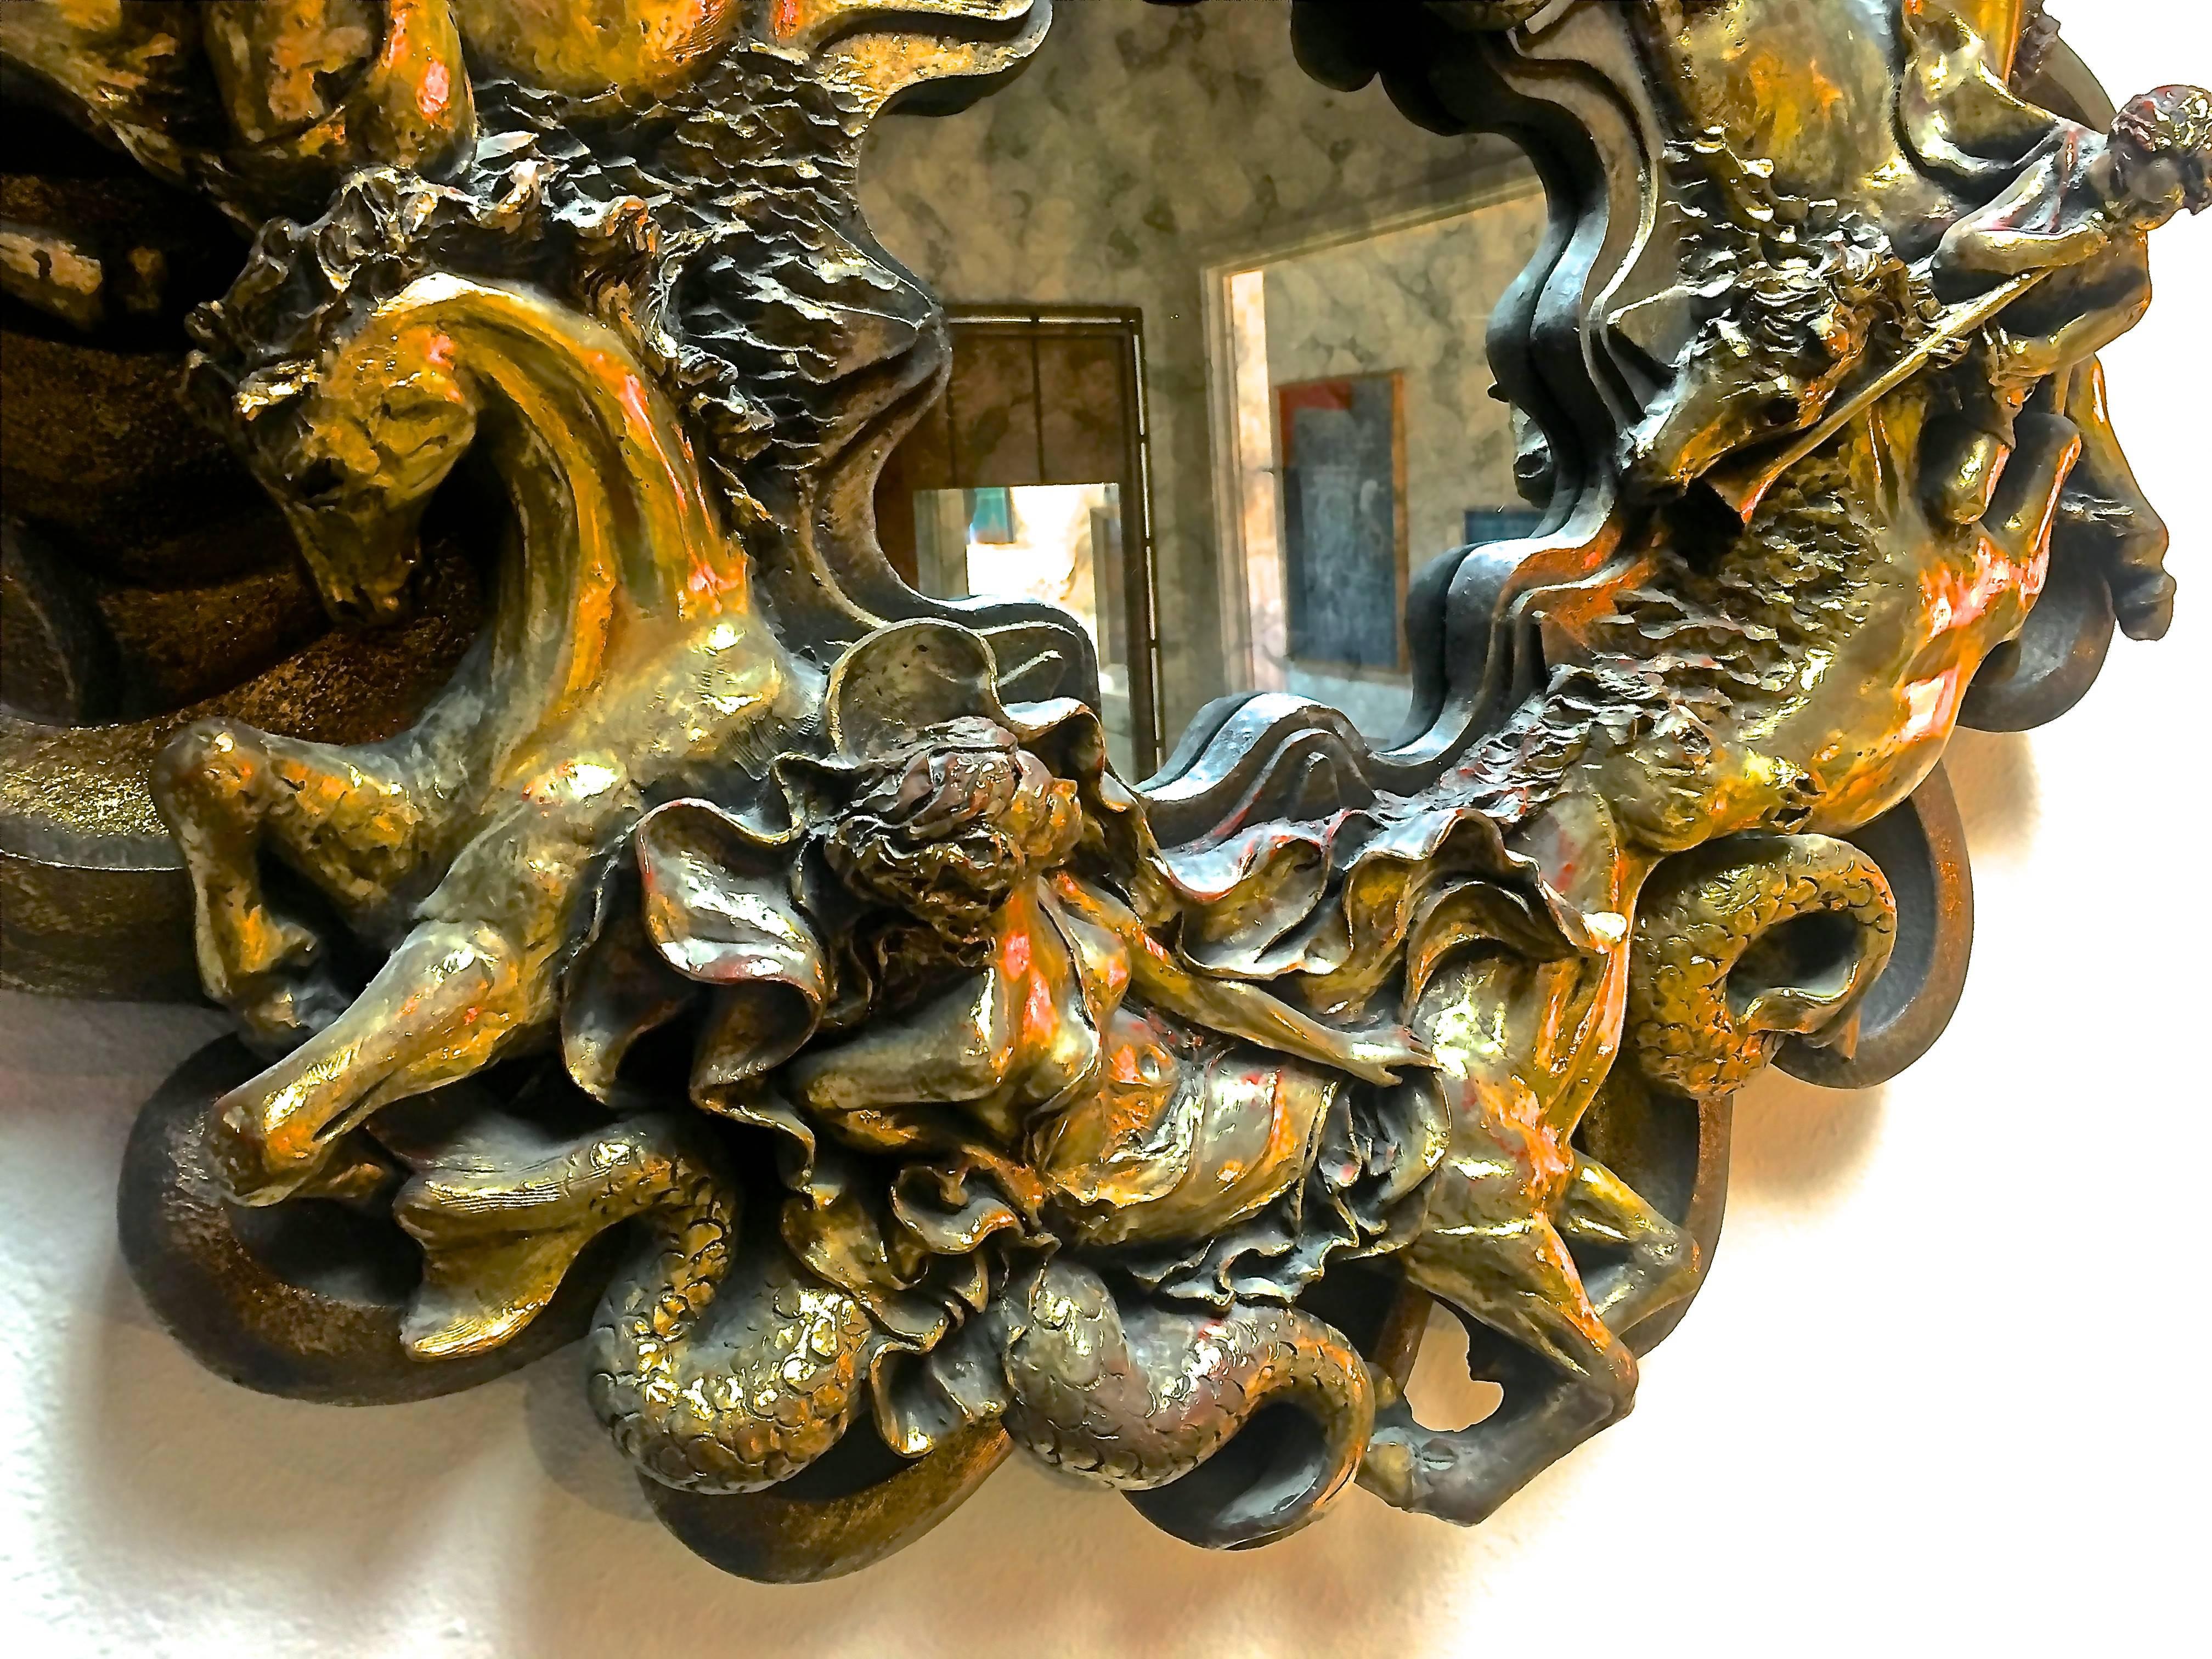 American Poseidon-Themed Substantial Sculptural Brutalist Mirror